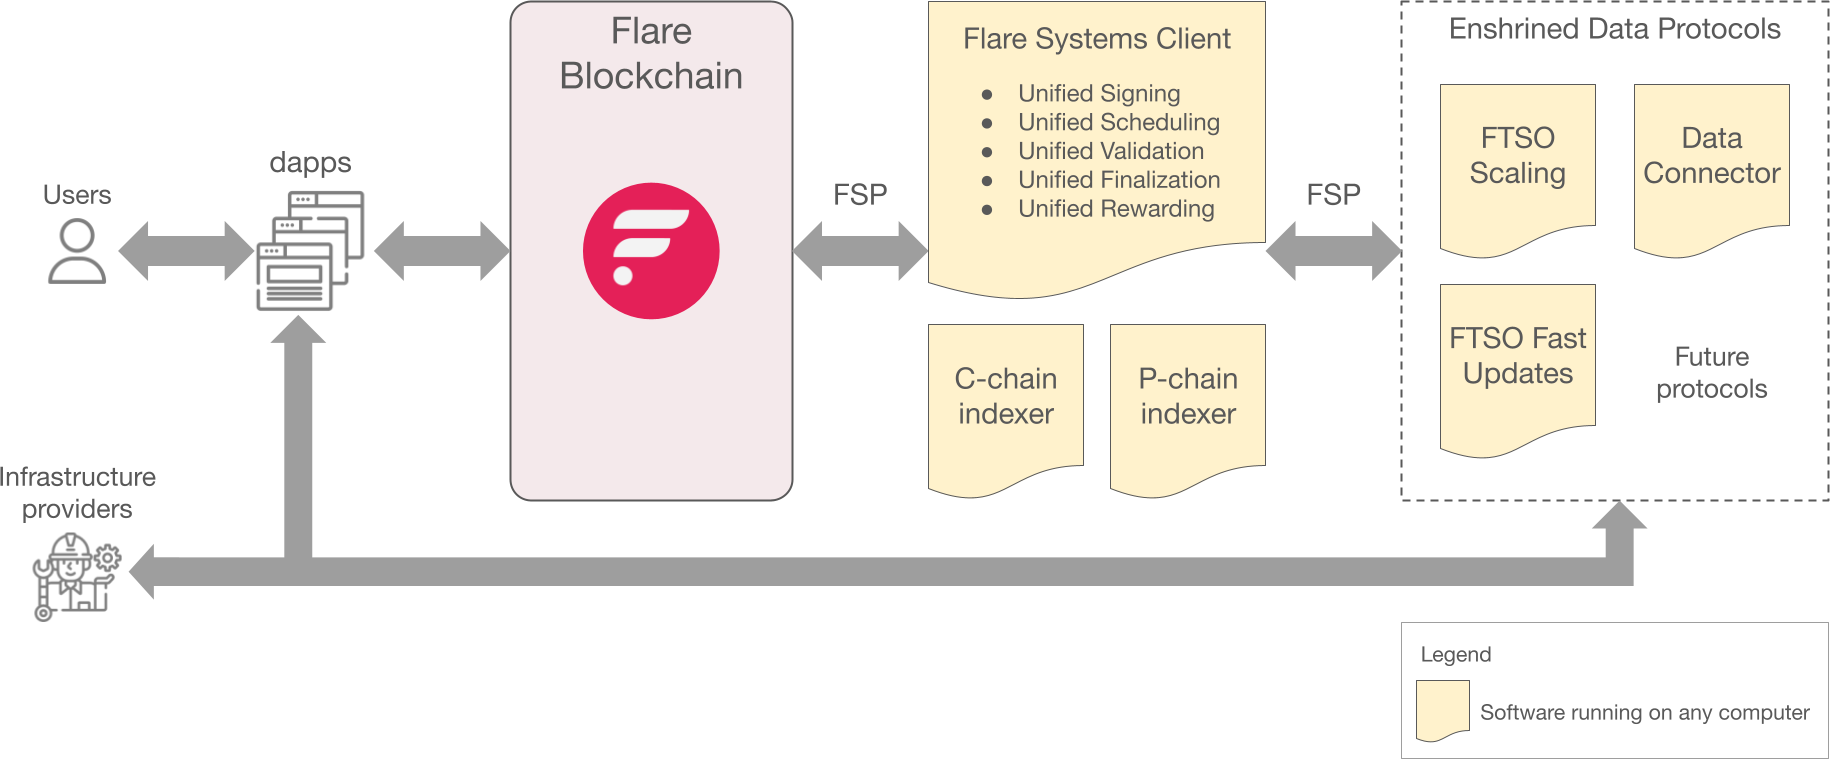 Flare Systems Protocol Architecture